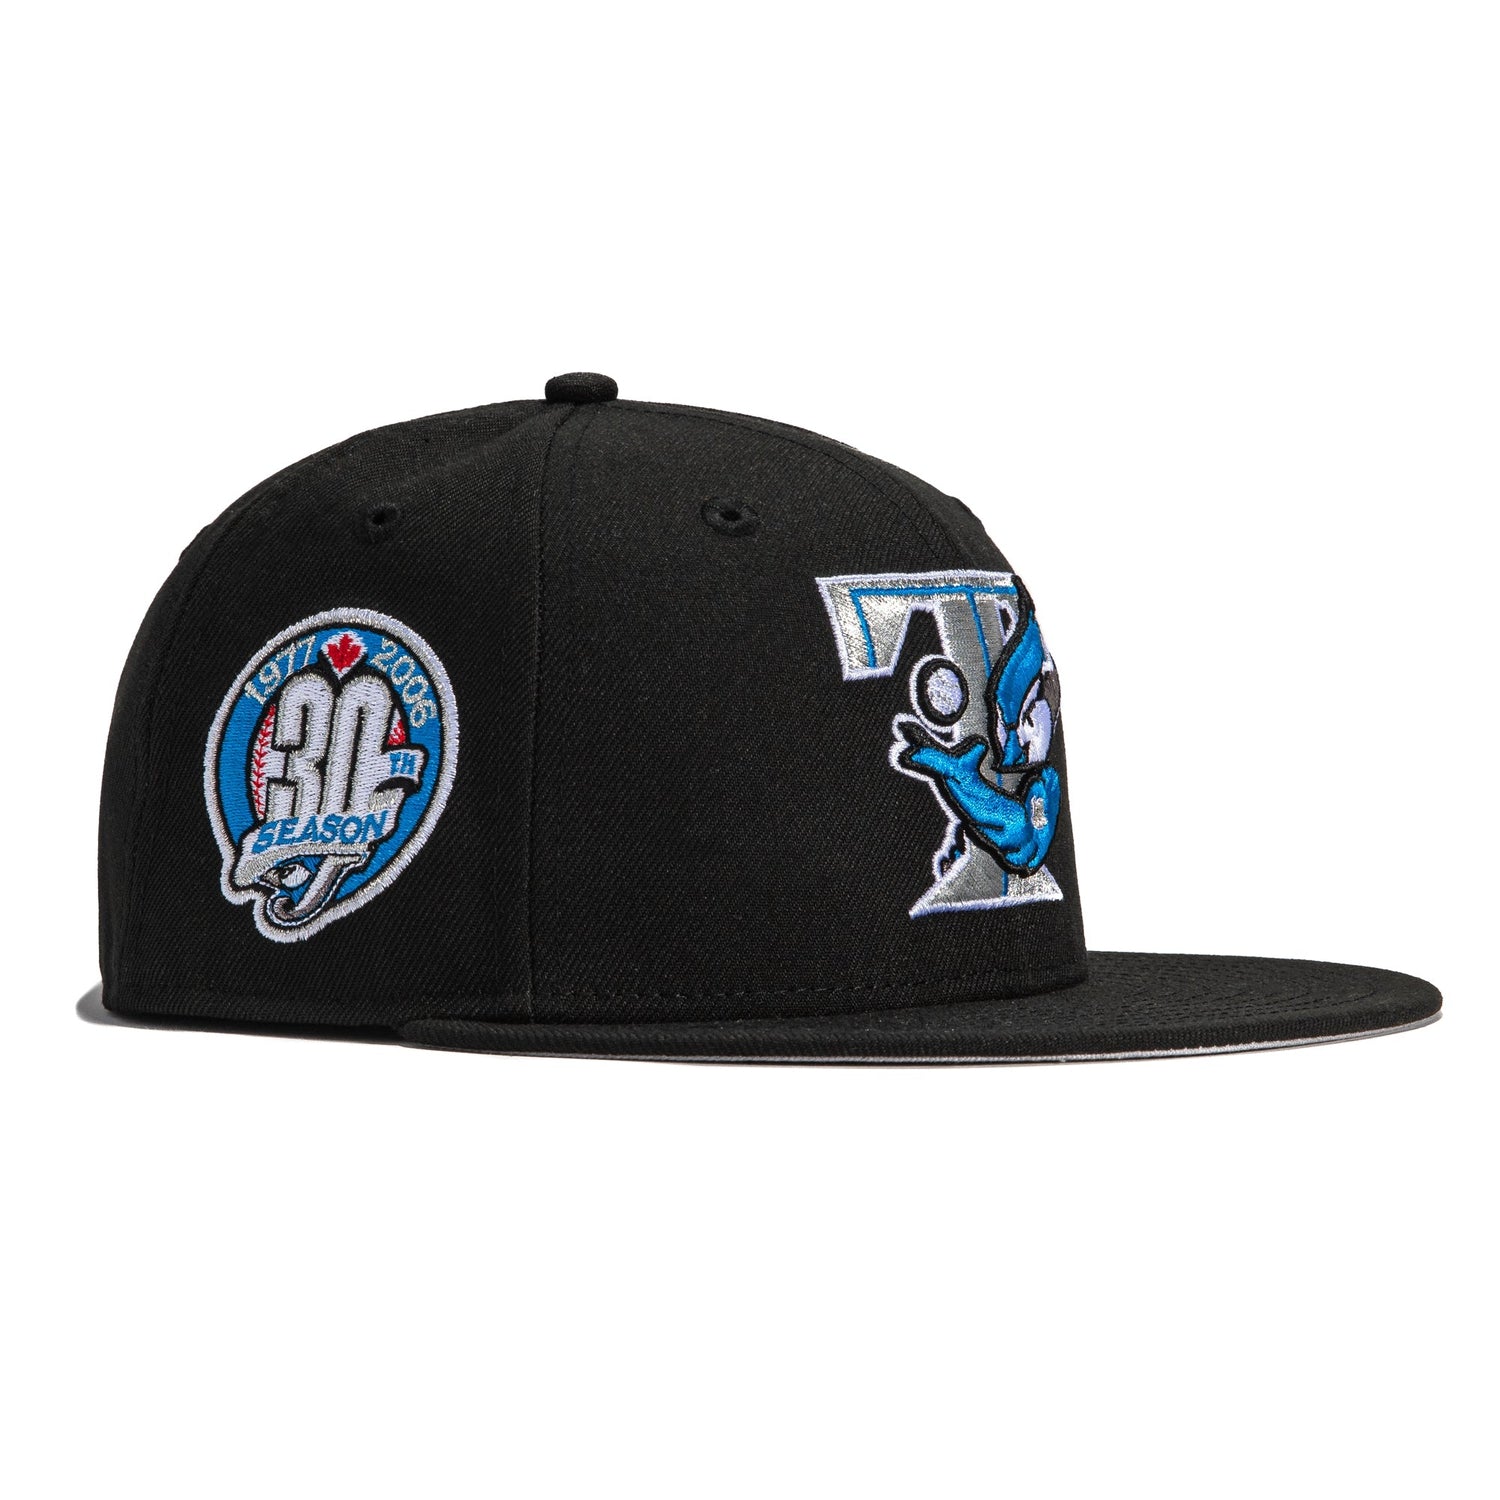 Official New Era Toronto Blue Jays MLB Snakeskin Team Green 59FIFTY Fitted  Cap B5135_292 B5135_292 B5135_292